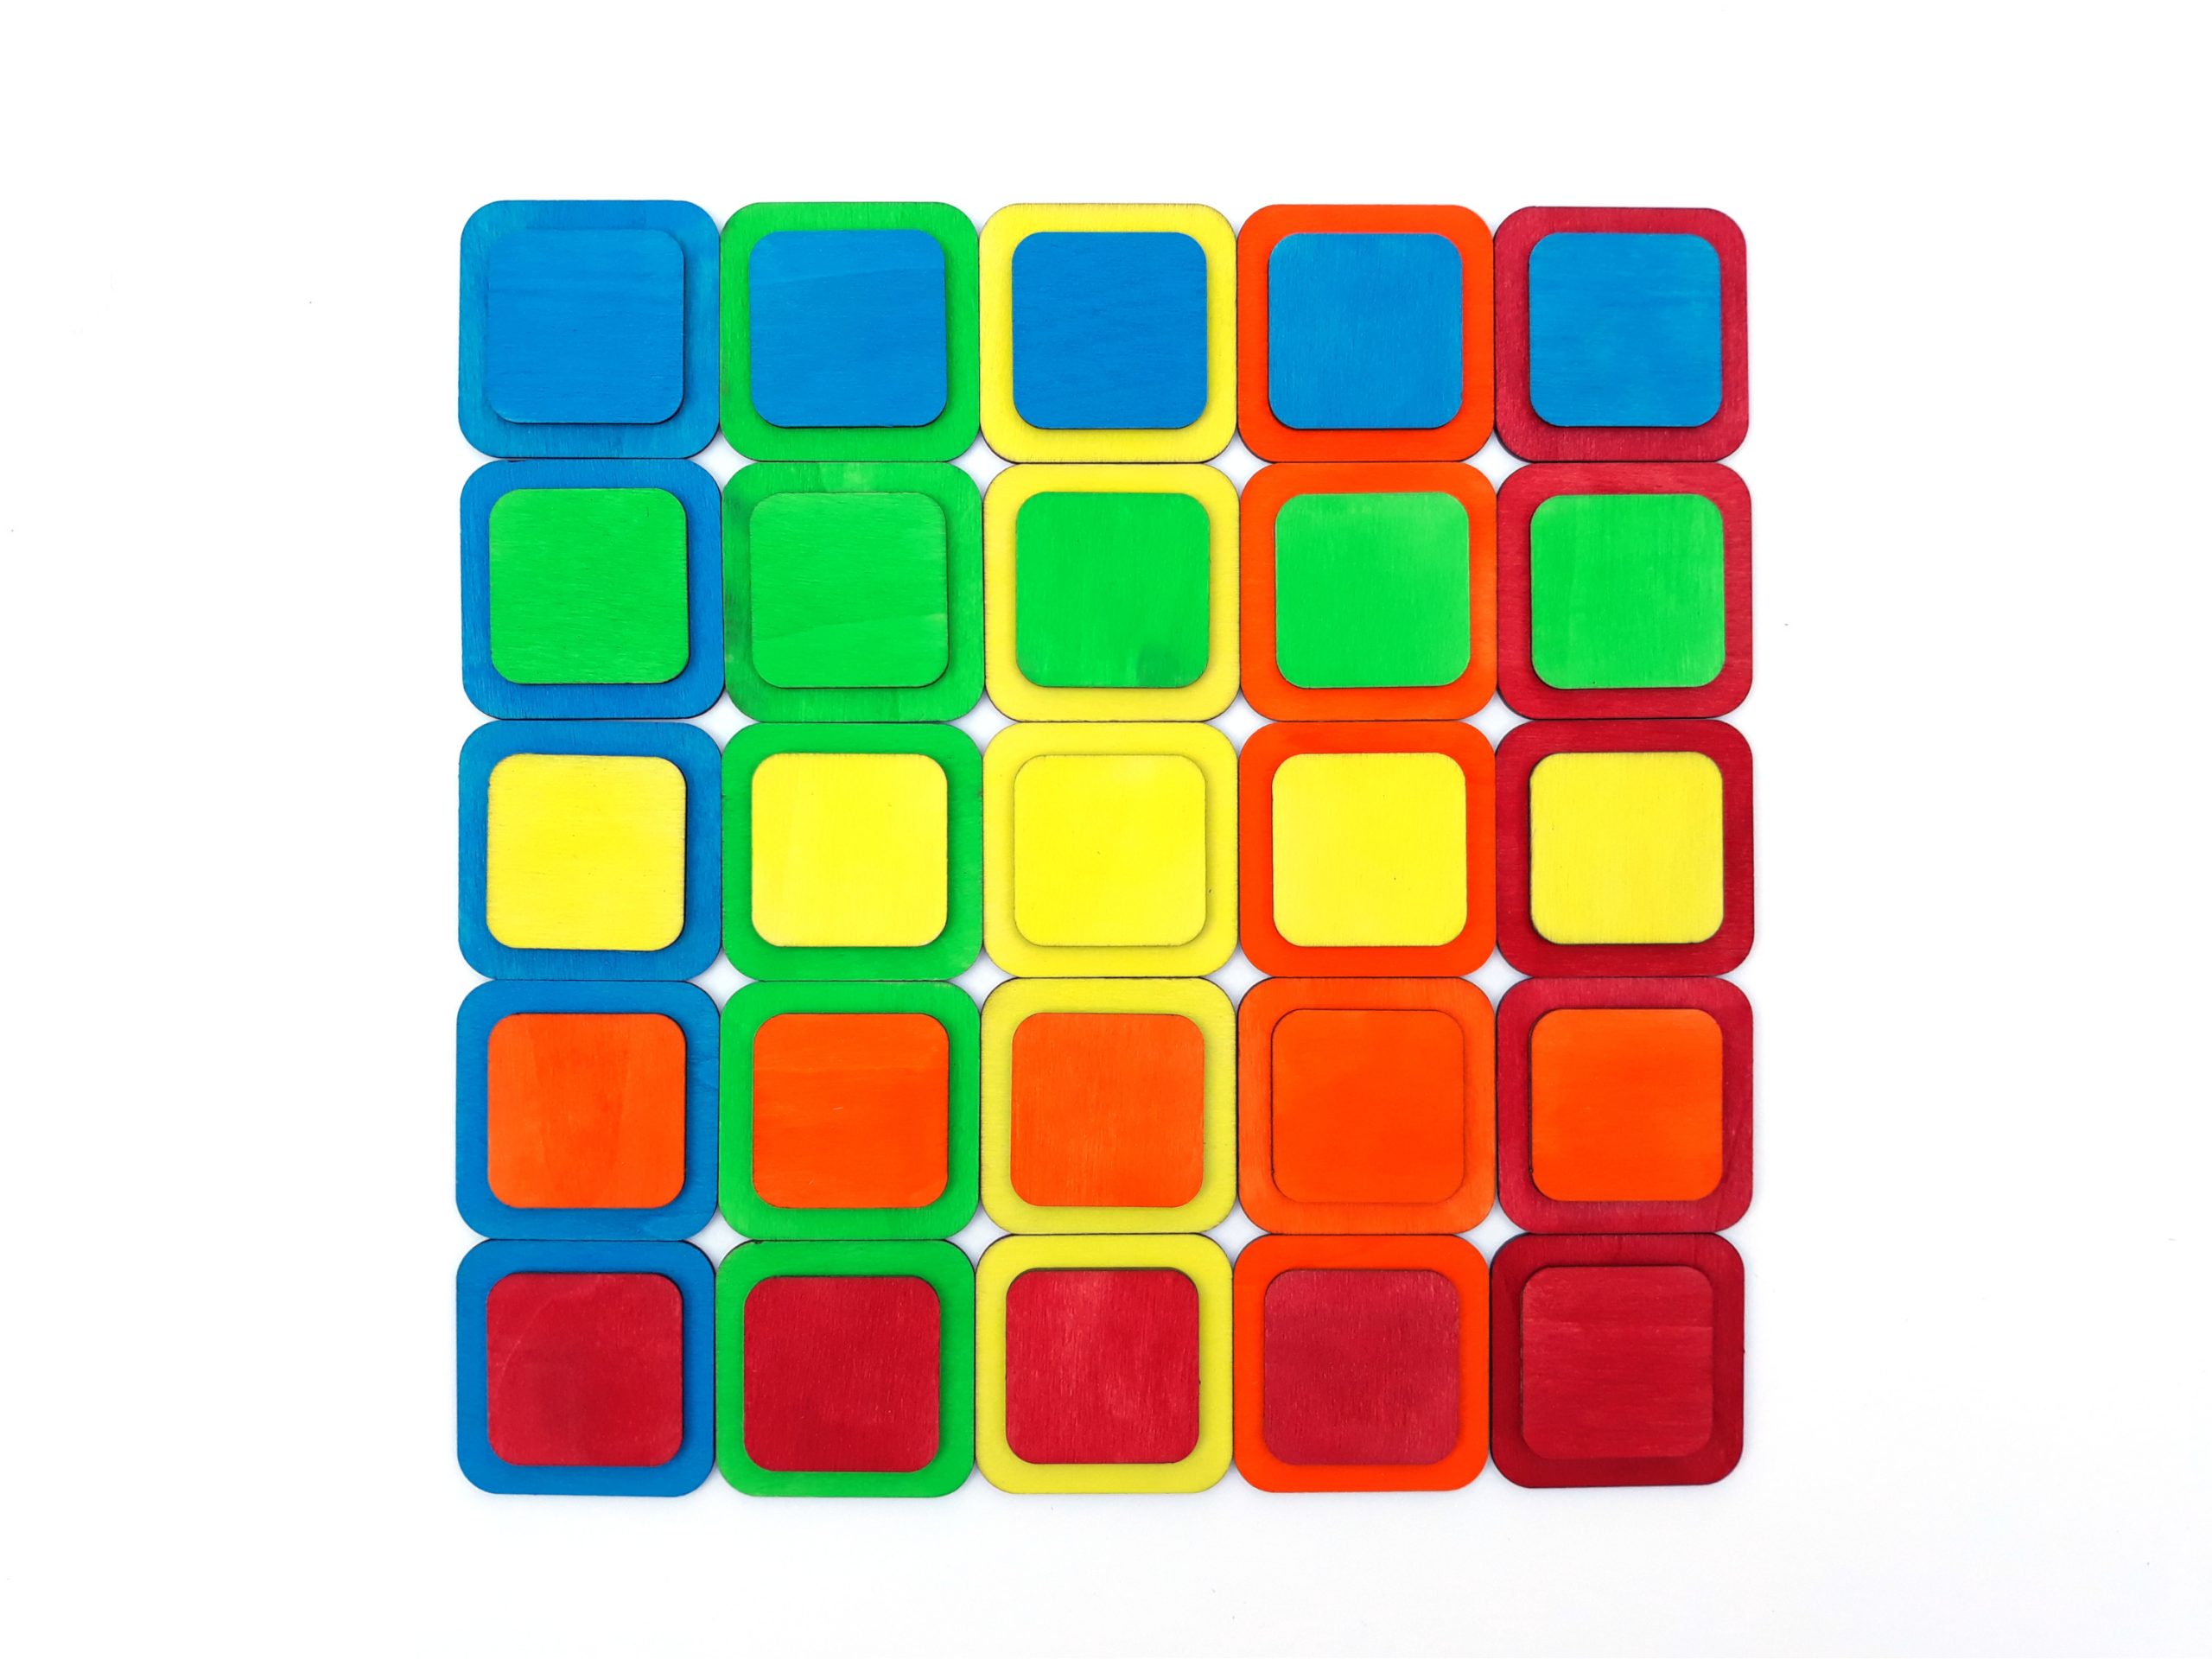 euler square 5x5